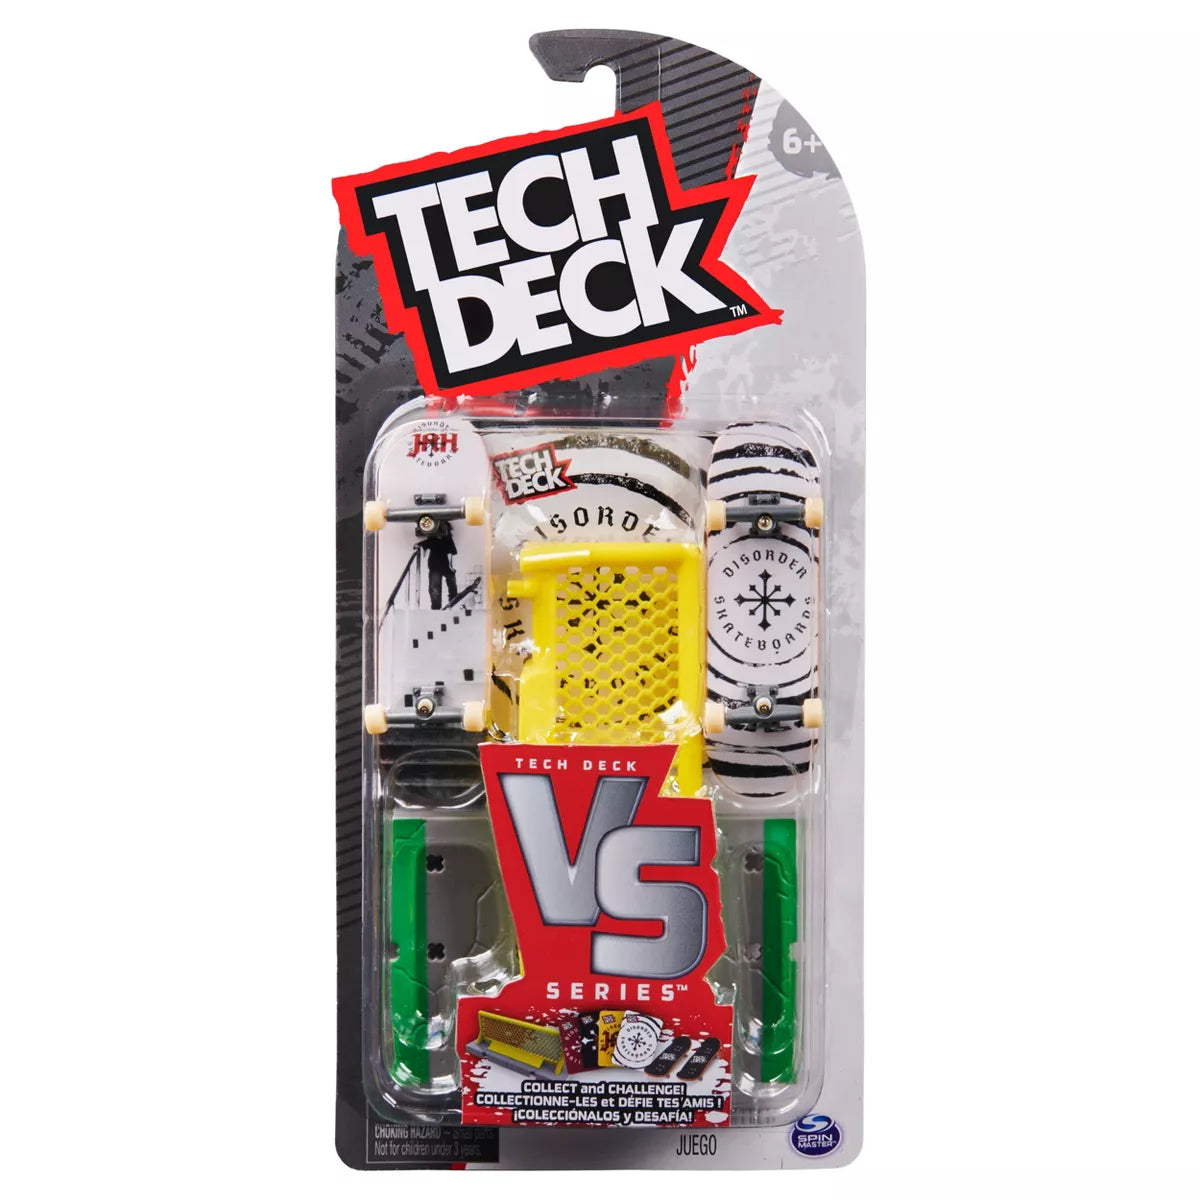 Tech Deck: Skateboards Versus Series - Disorder 2 Pack